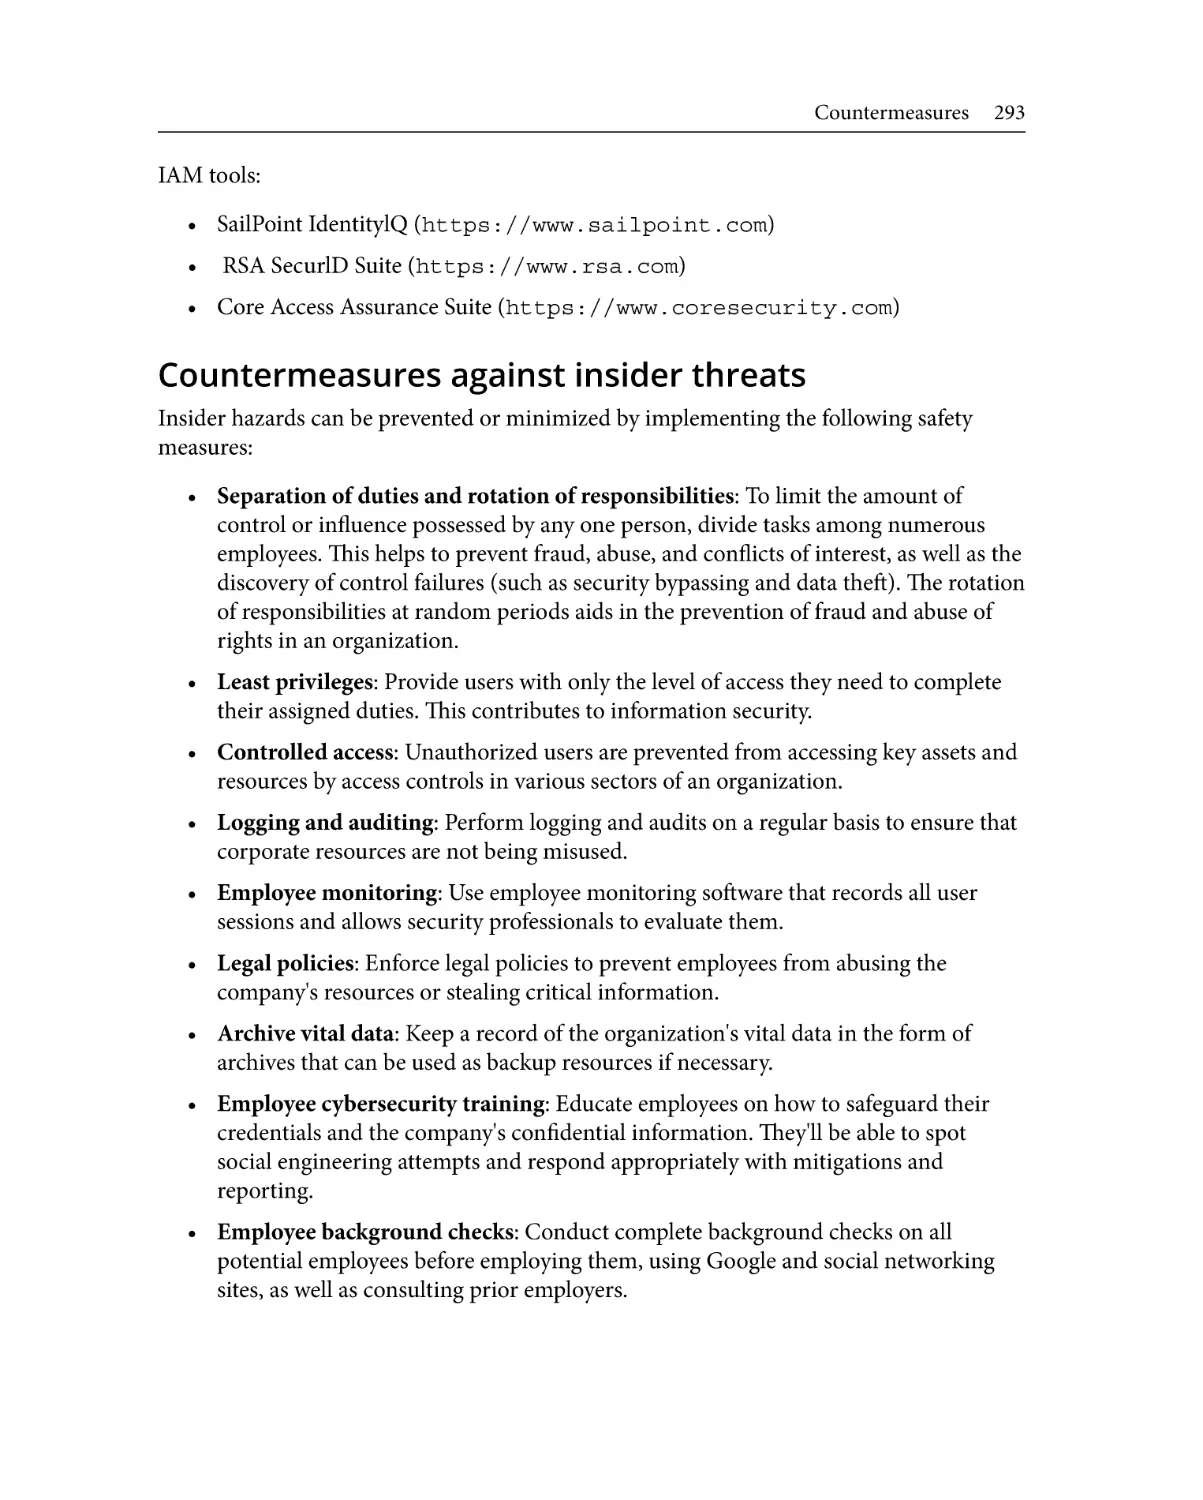 Countermeasures against insider threats